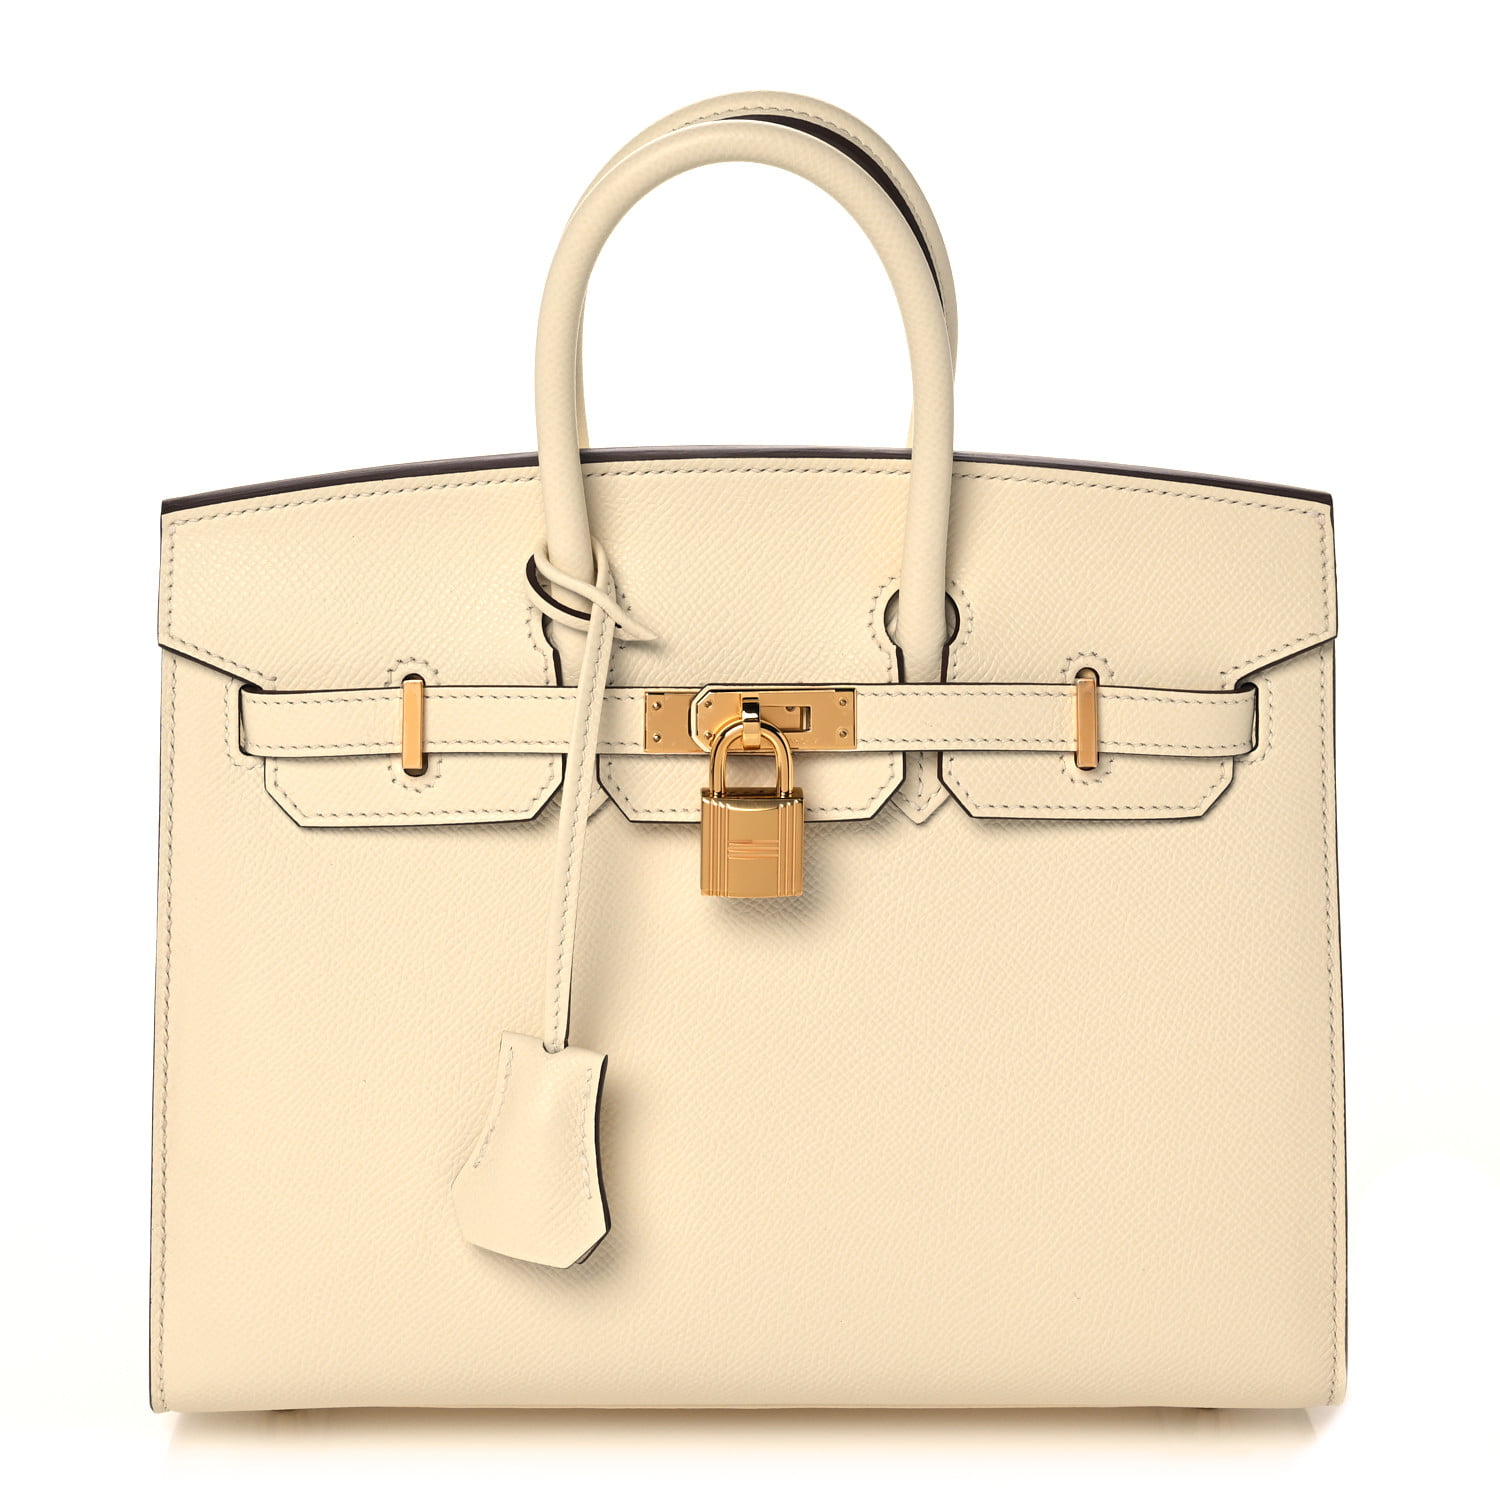 Up Close and Personal with the Hermès Geta Bag | PurseBop